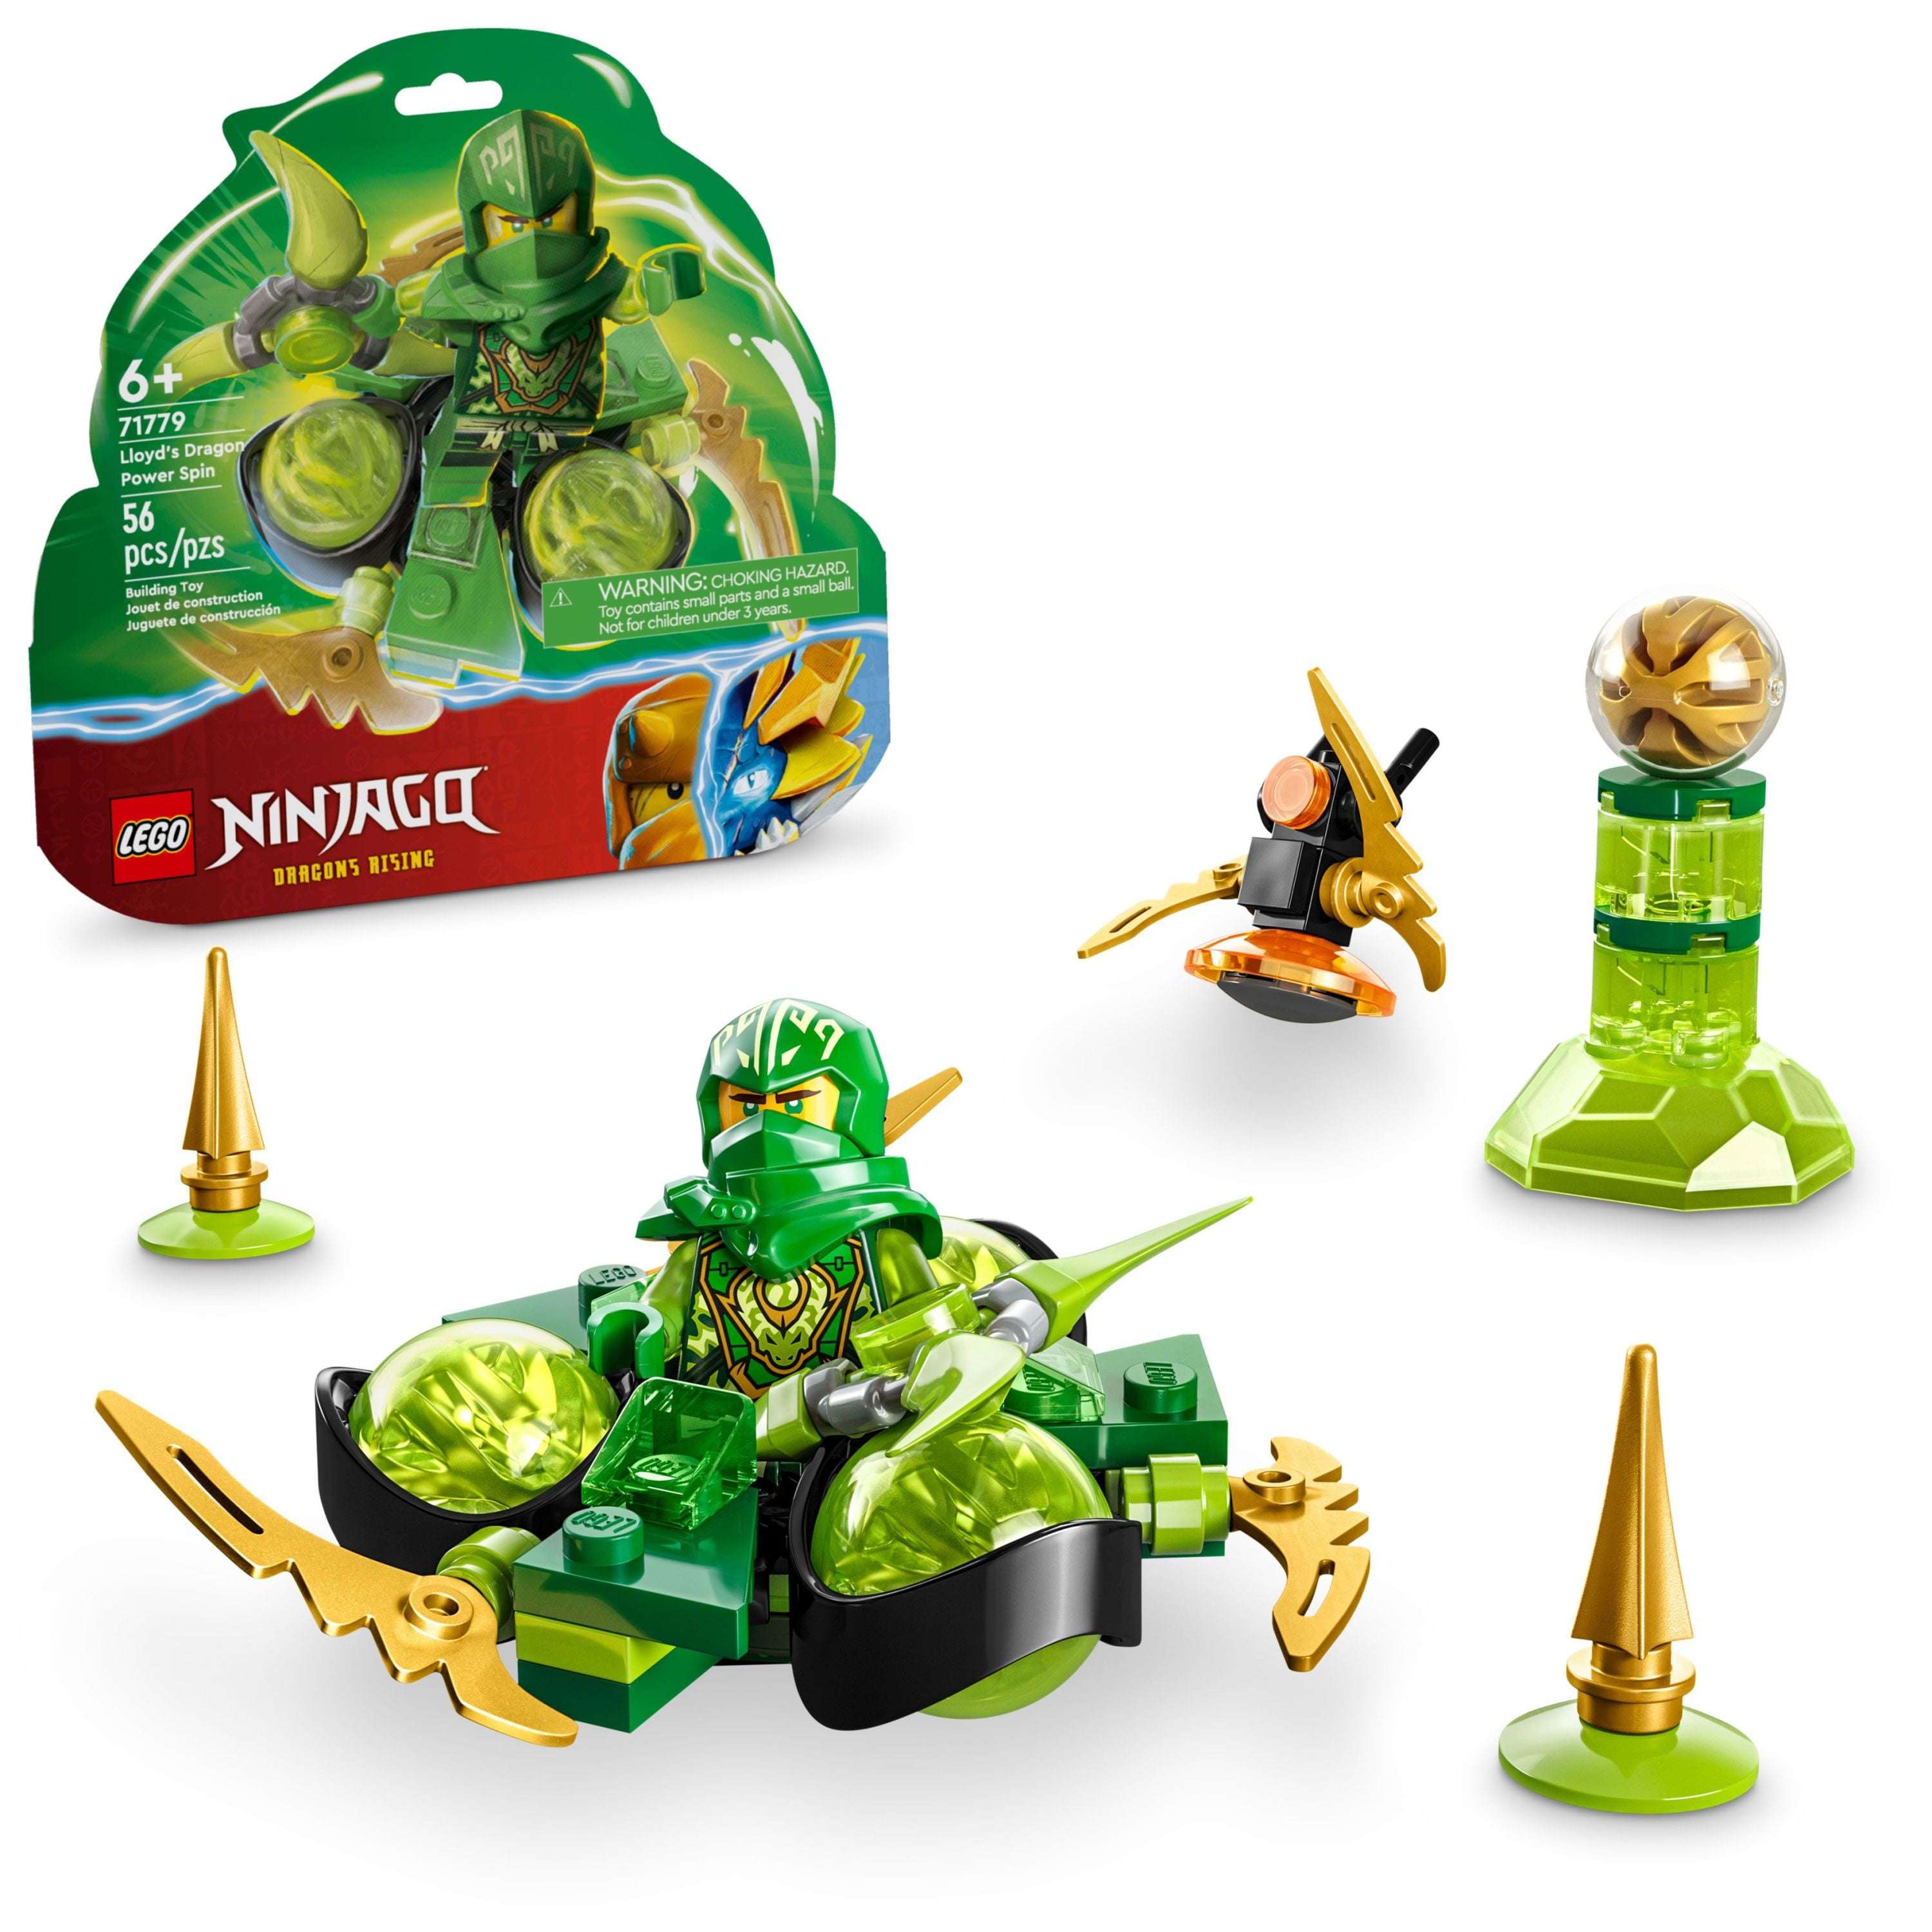 LEGO NINJAGO Lloyd’s Dragon Power Spinjitzu Spin 71779 Green Spinning  Building Toy with Ninja Lloyd Minifigure, Gift Idea for Boy and Girl Ninja  Fans